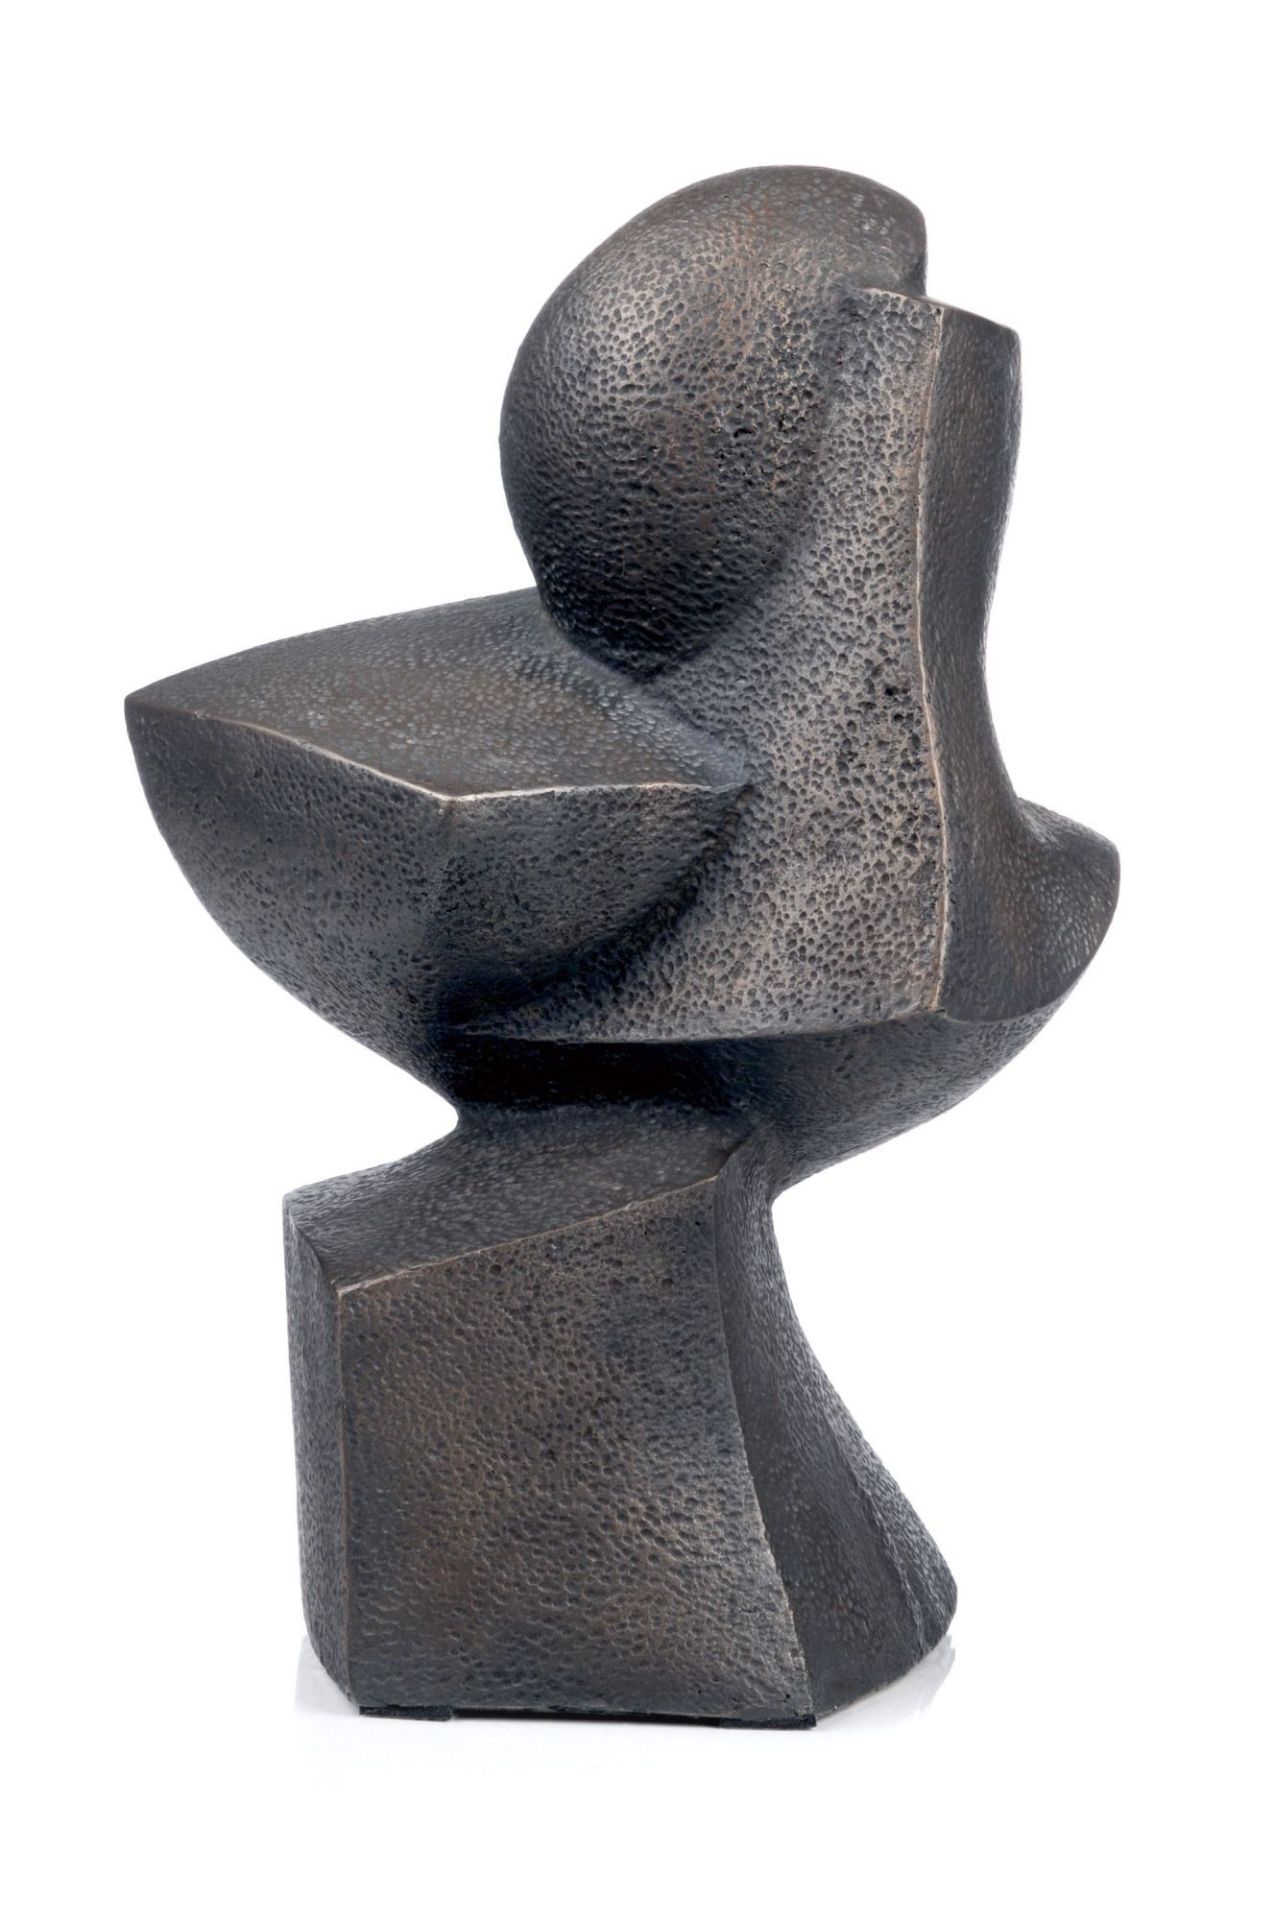 Paul Hofmann "Figur". 2002.